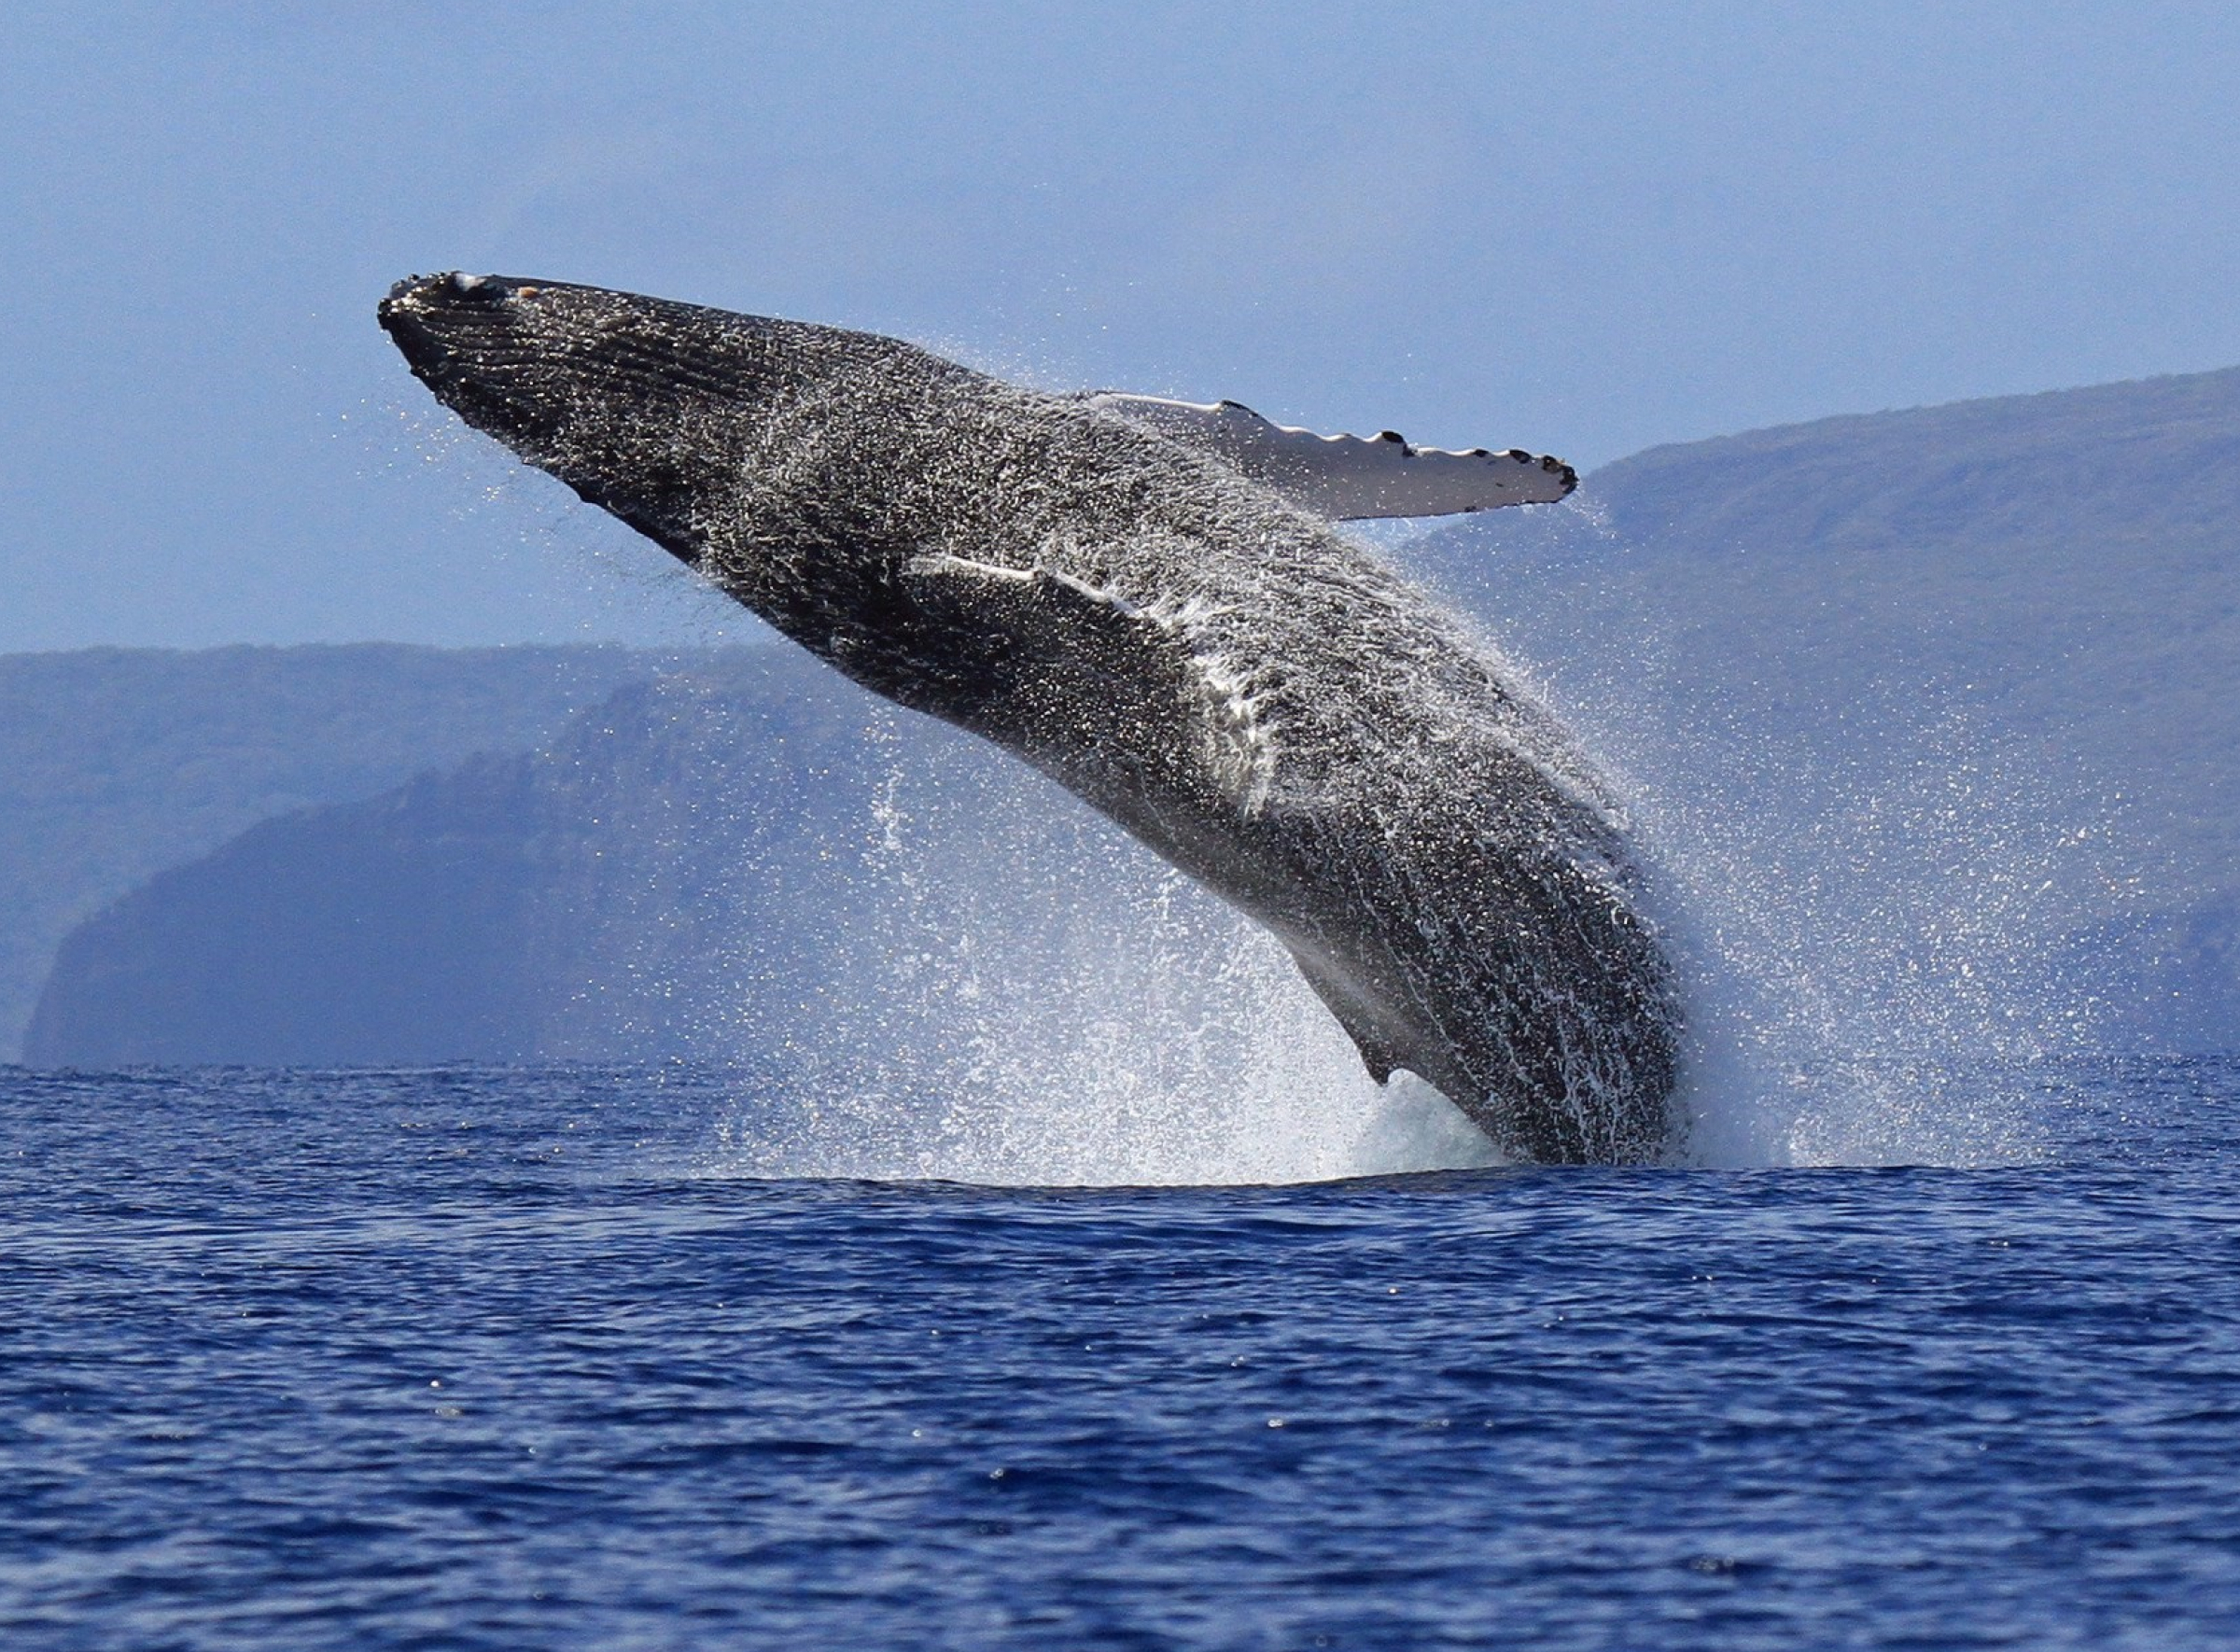 Whale-Watching Excursions Near Rio de Janeiro Captivate Tourists